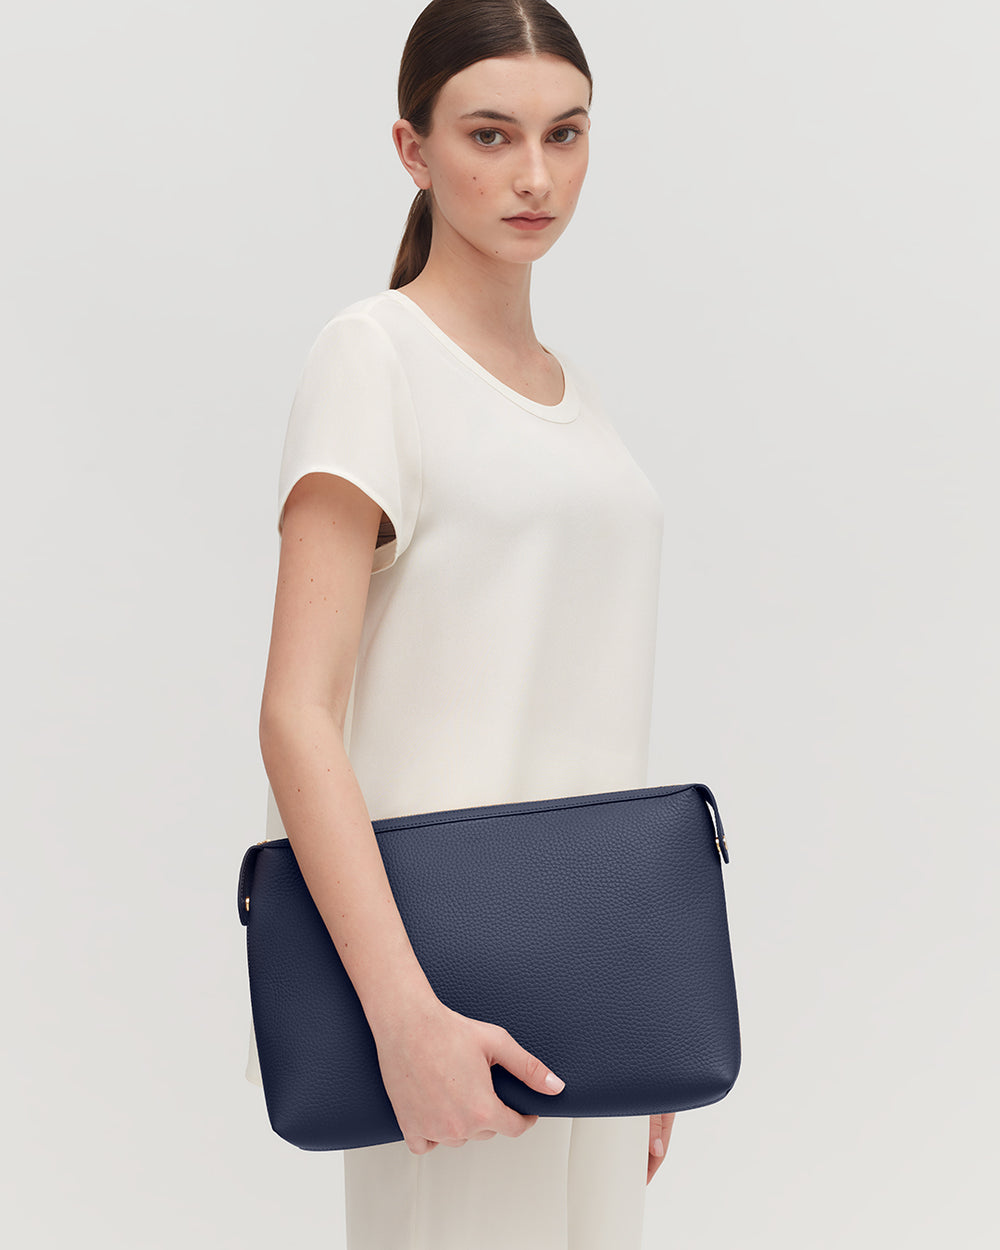 Woman holding a handbag, standing against a plain background.